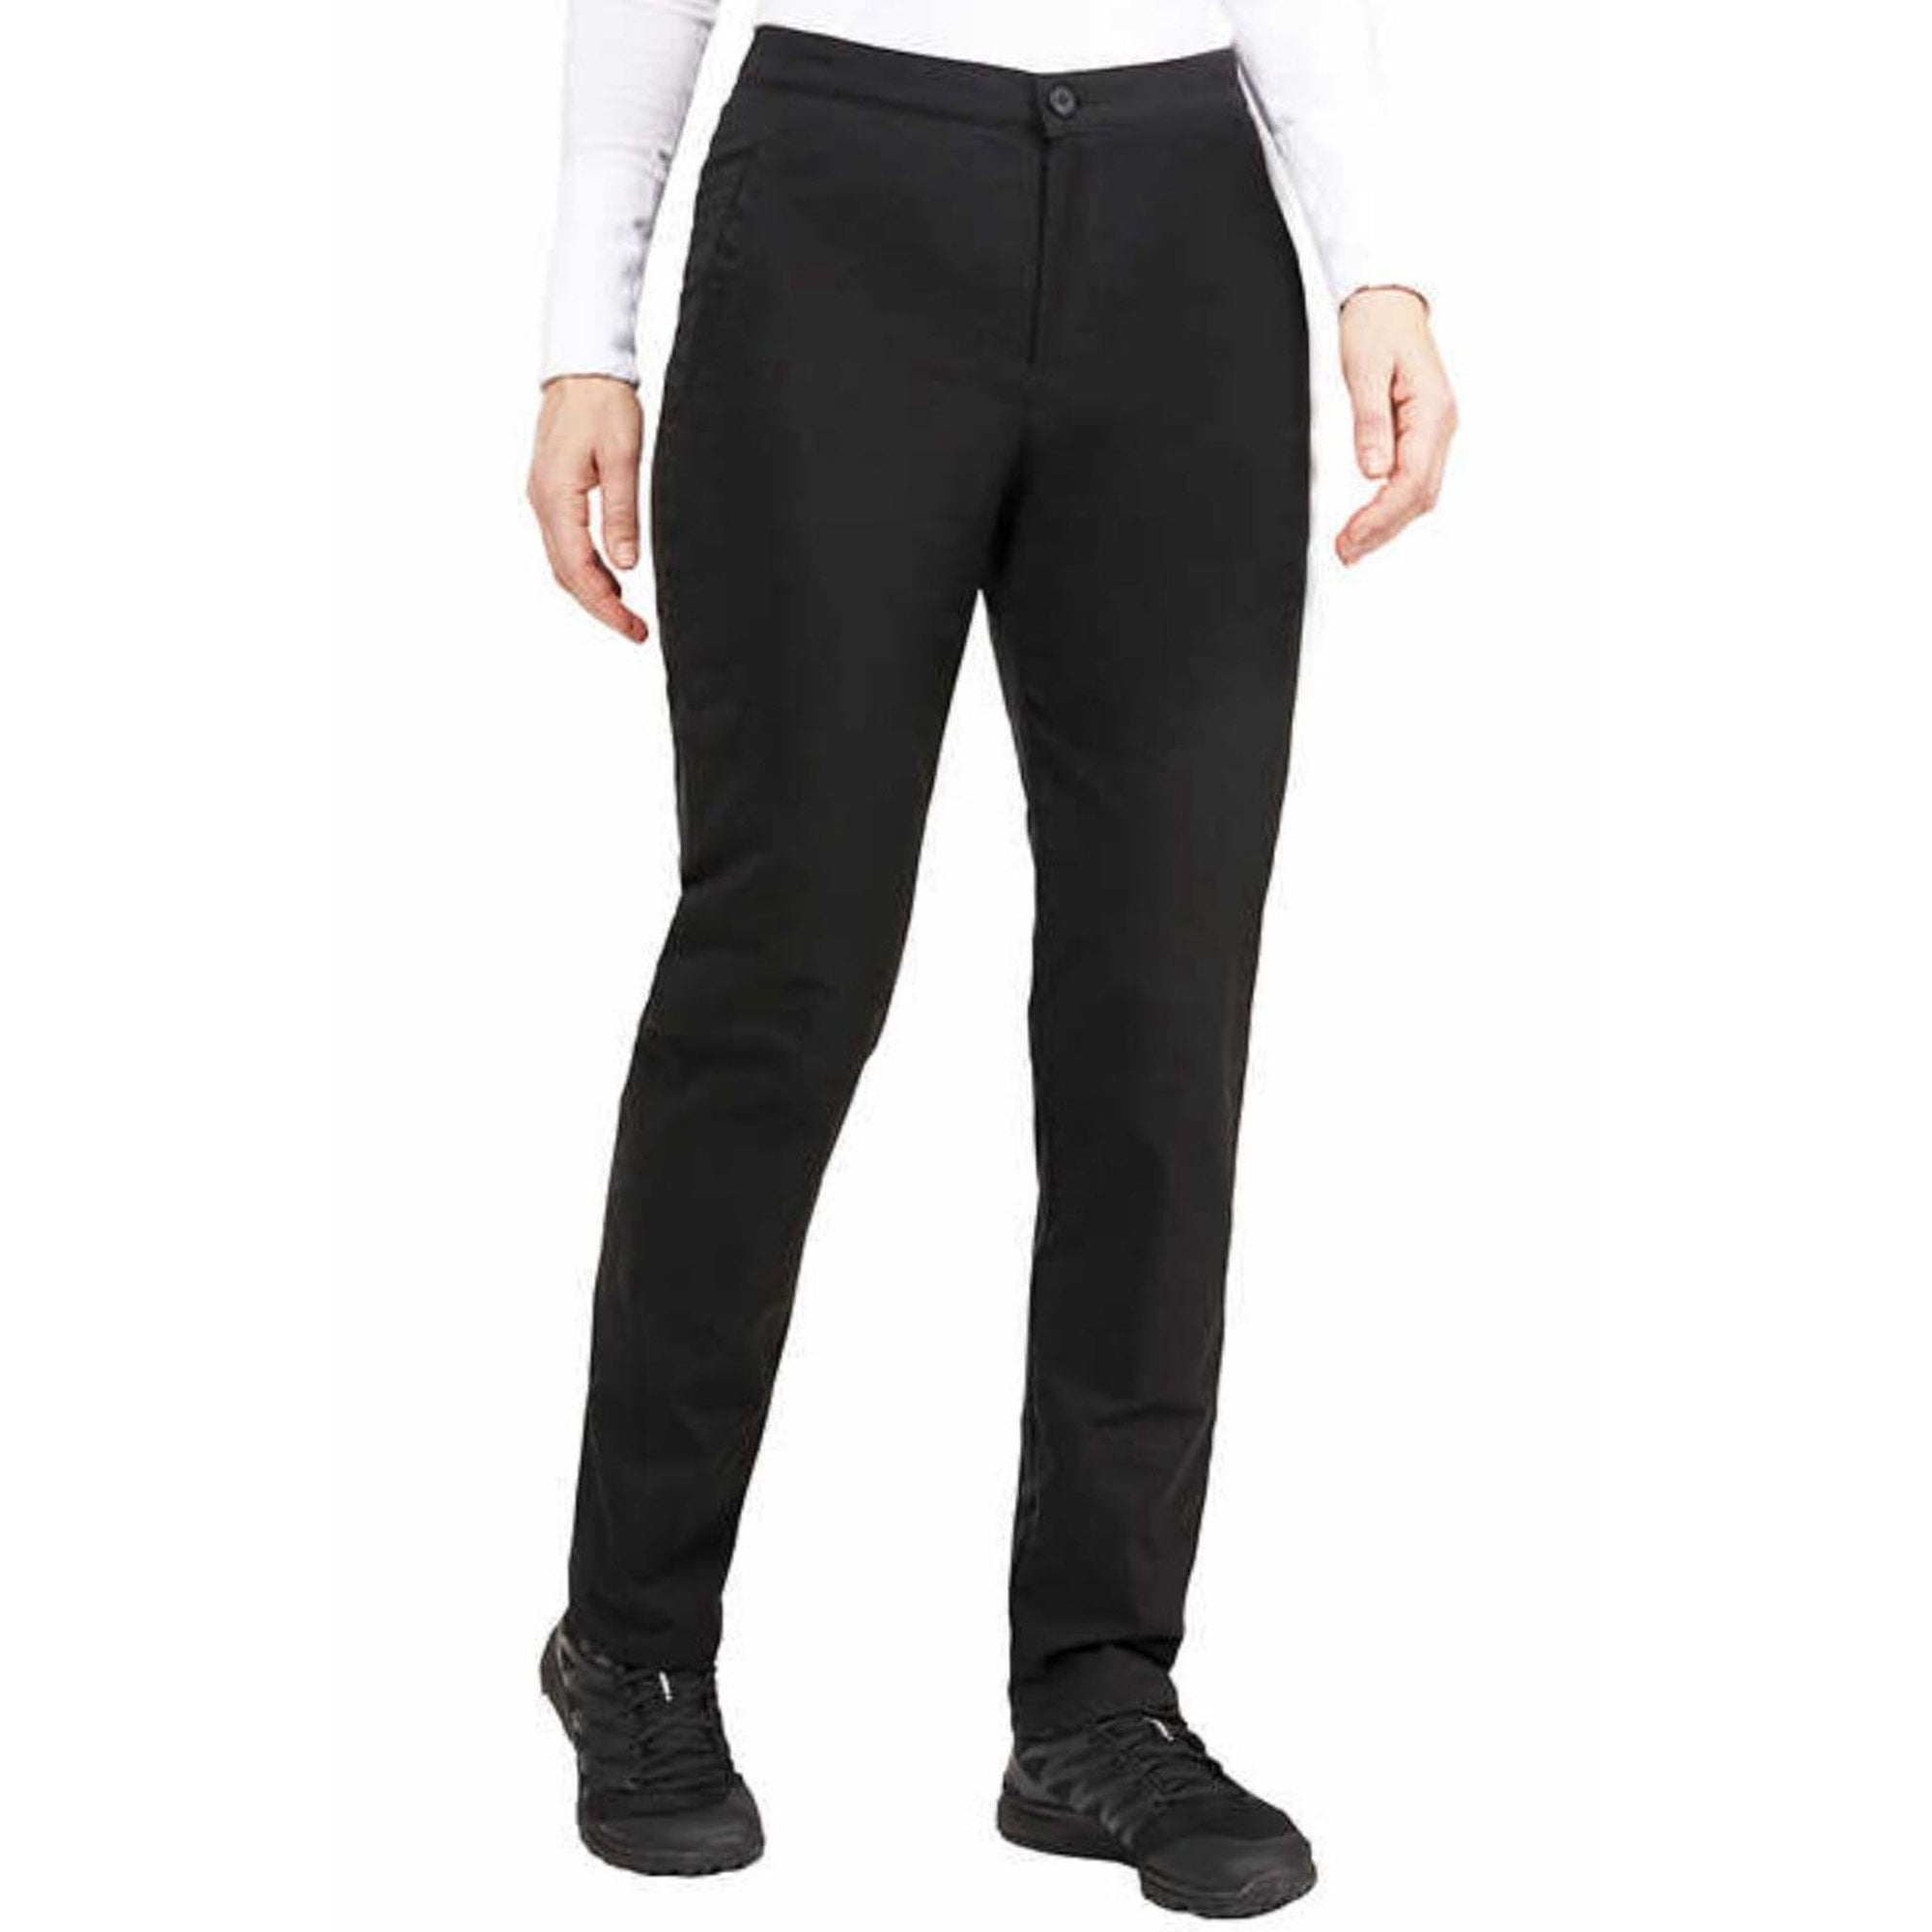 Stormpack Womens Fleece Lined Pant Black XL - Walmart.com